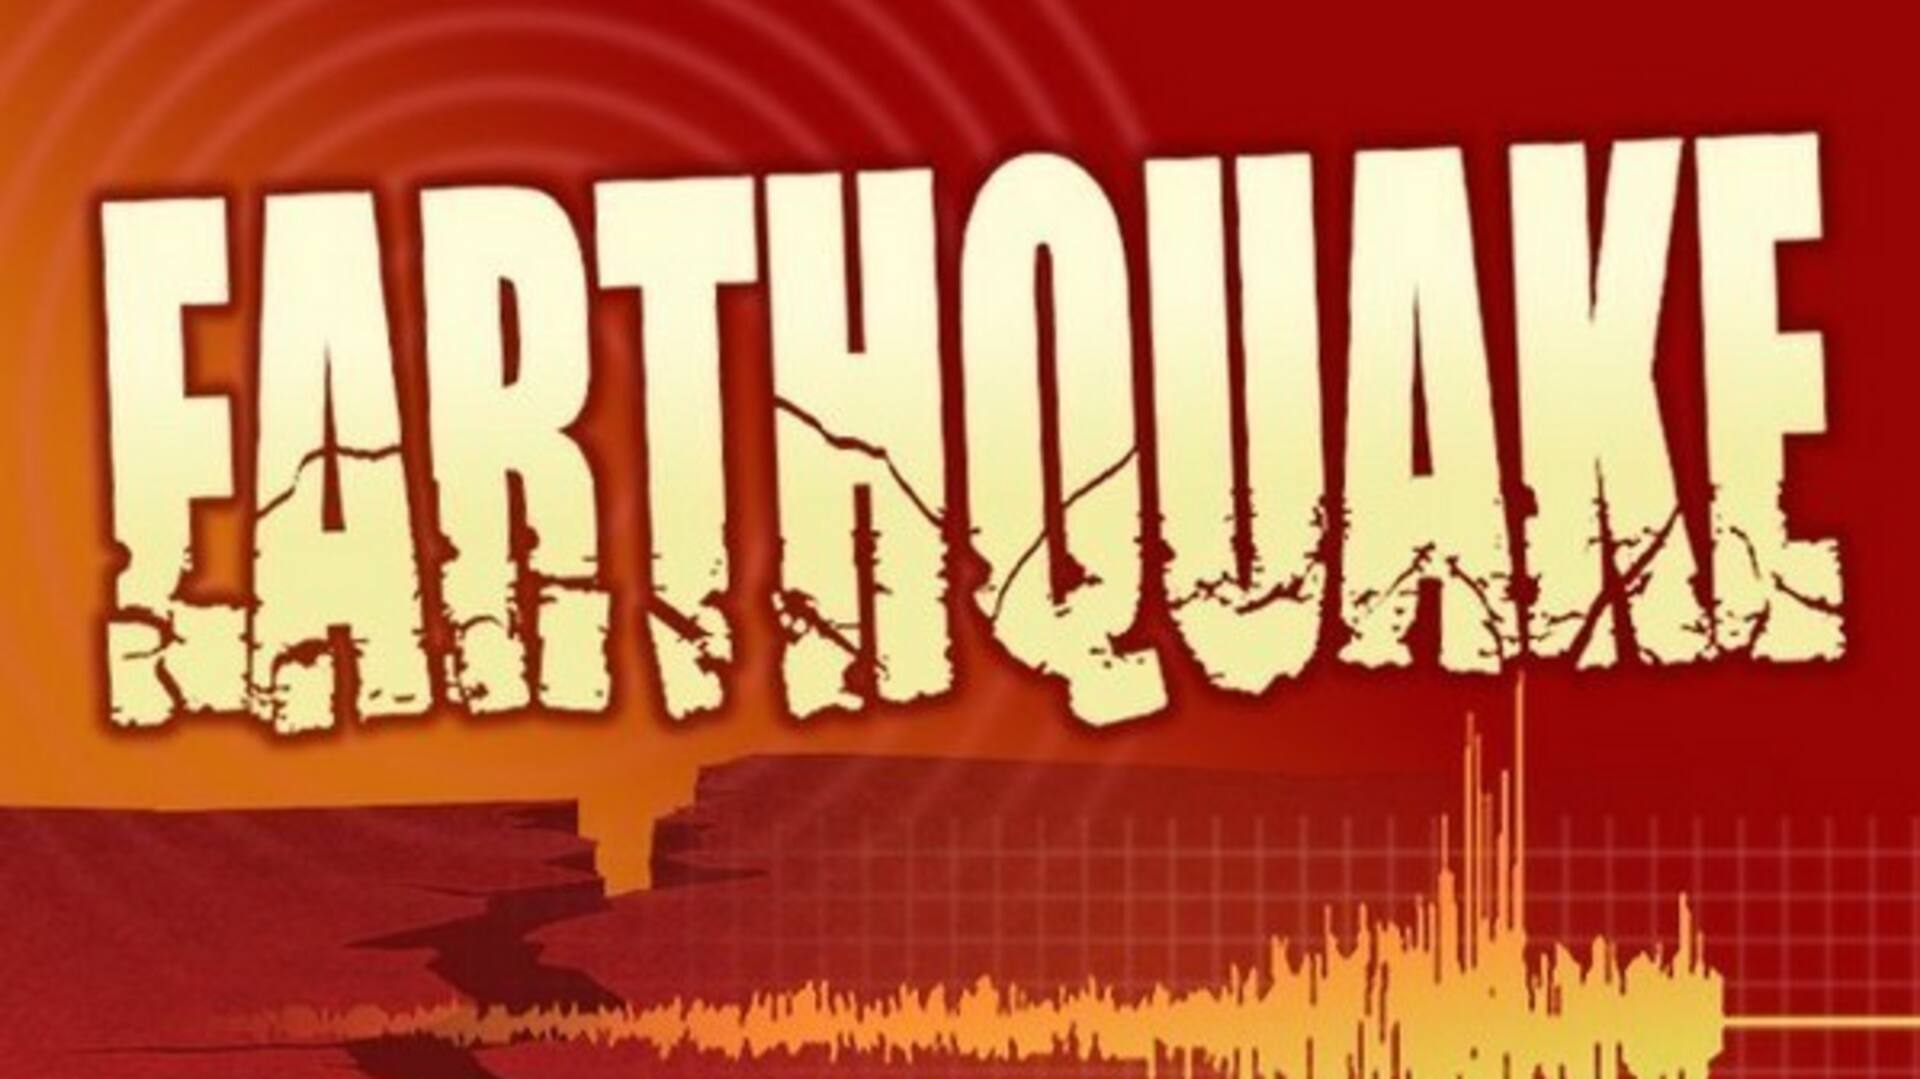 Earthquakes: ఆఫ్ఘనిస్తాన్‌లో 30 నిమిషాల వ్యవధిలో రెండుసార్లు భూకంపం